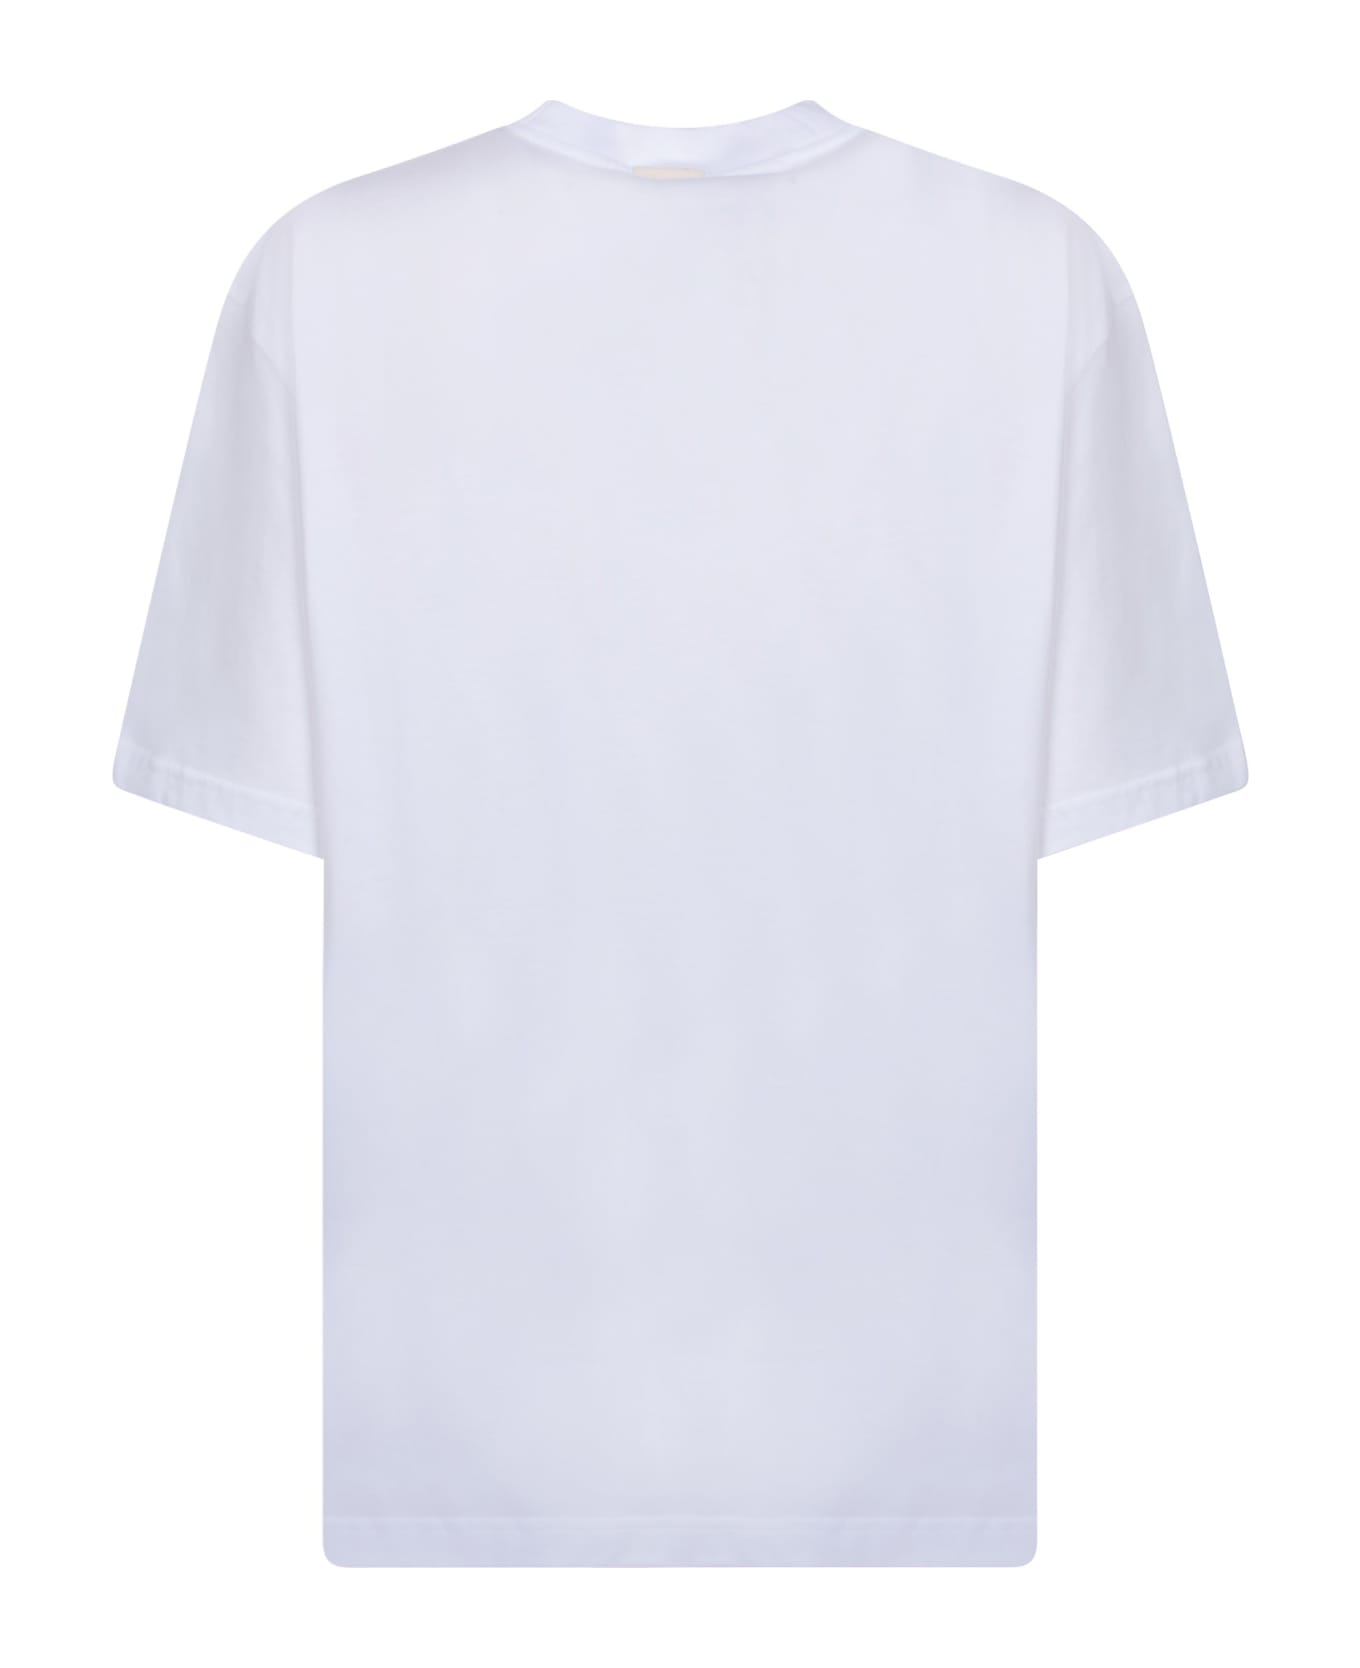 Sunnei White Head Of Fashion T-shirt - White